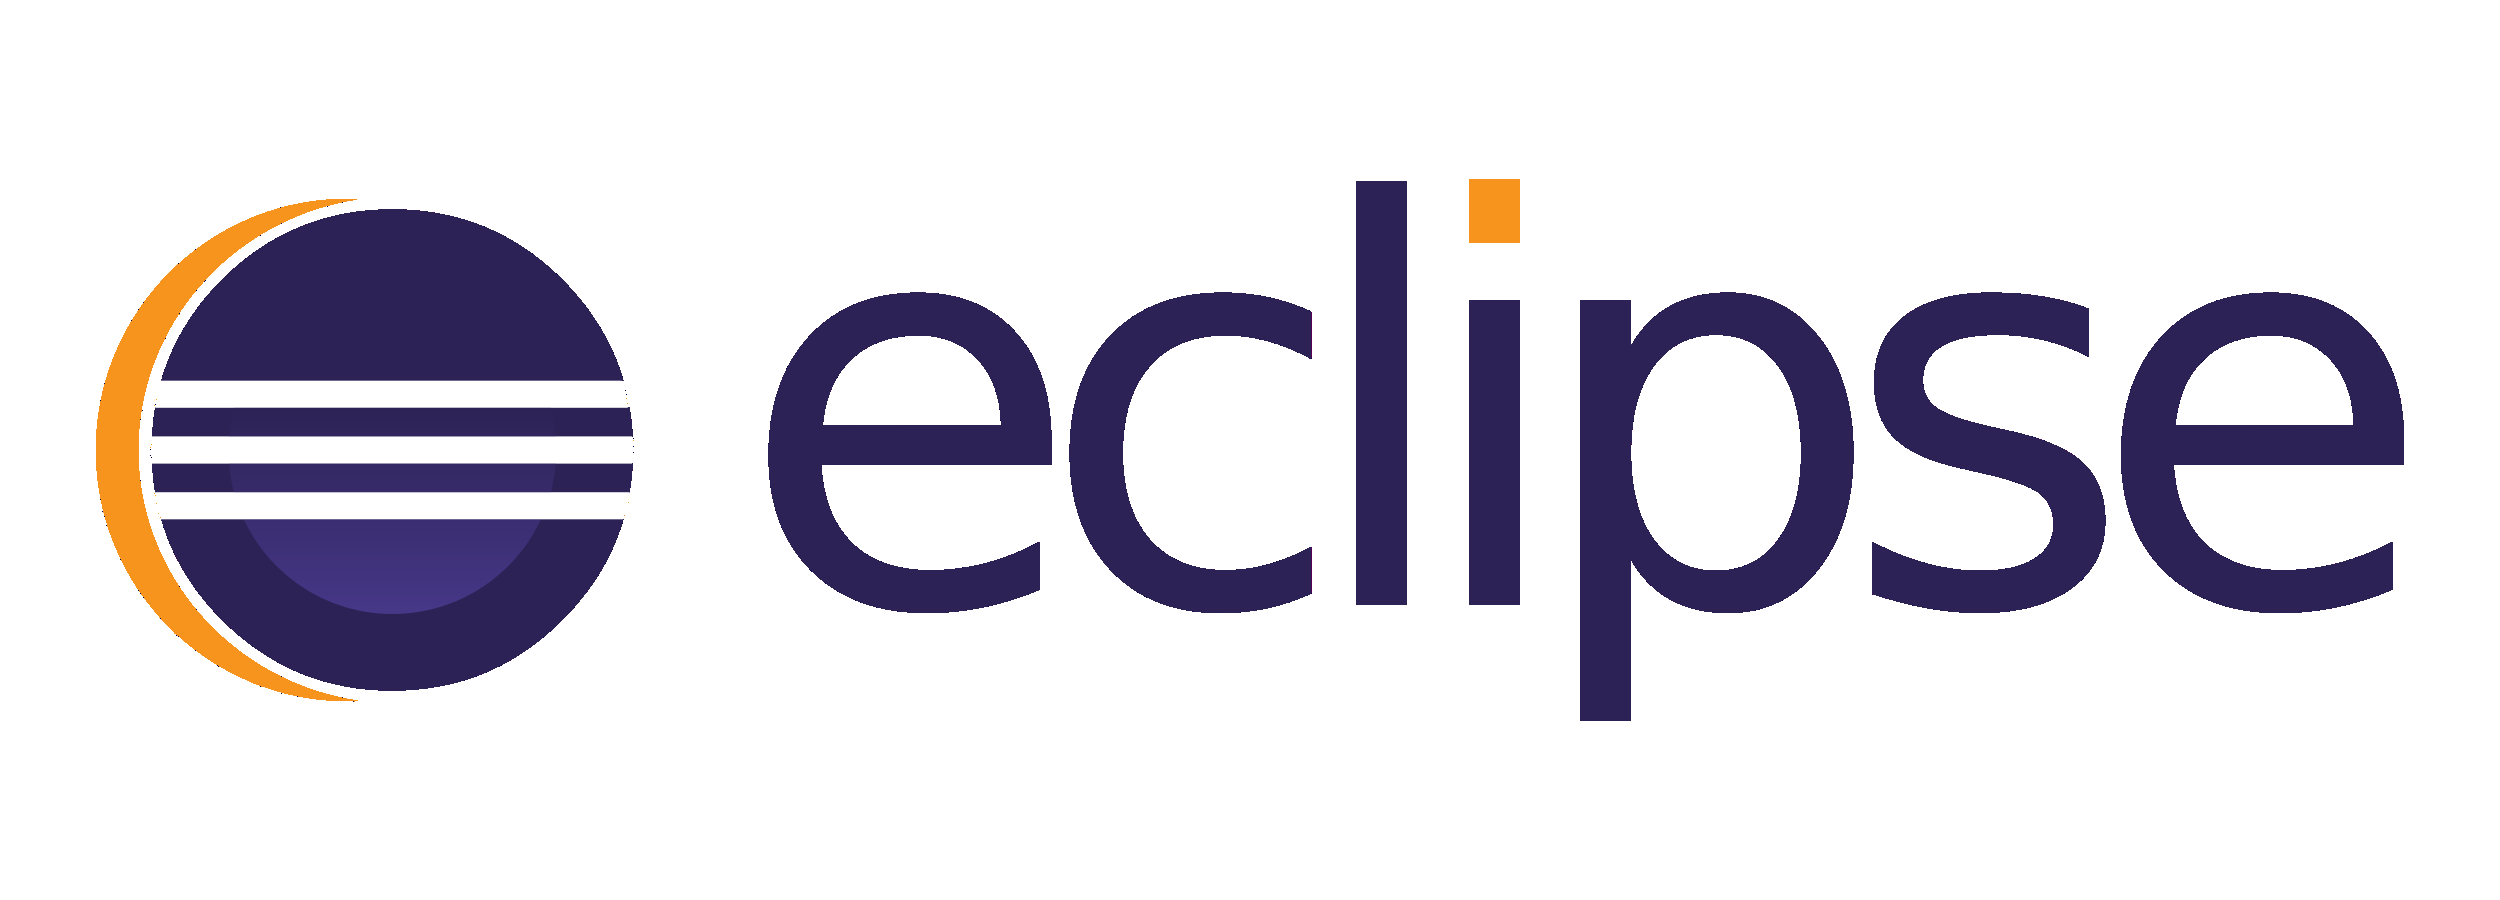 Eclipse_logo